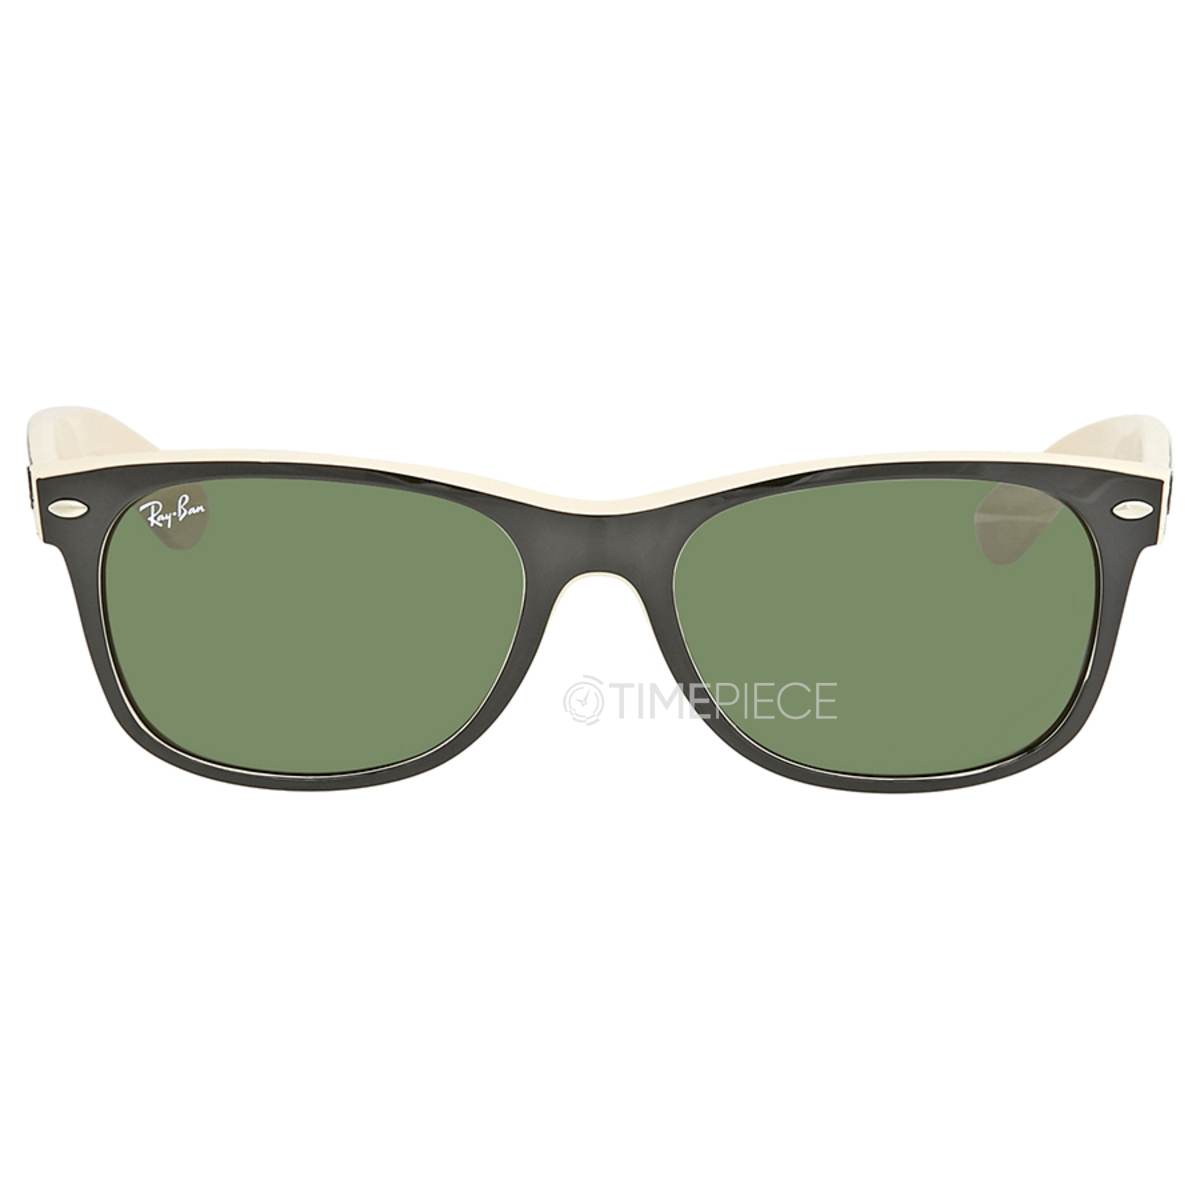 Ray Ban New Wayfarer Color Mix Green Classic G-15 Unisex Sunglasses RB2132  875 55